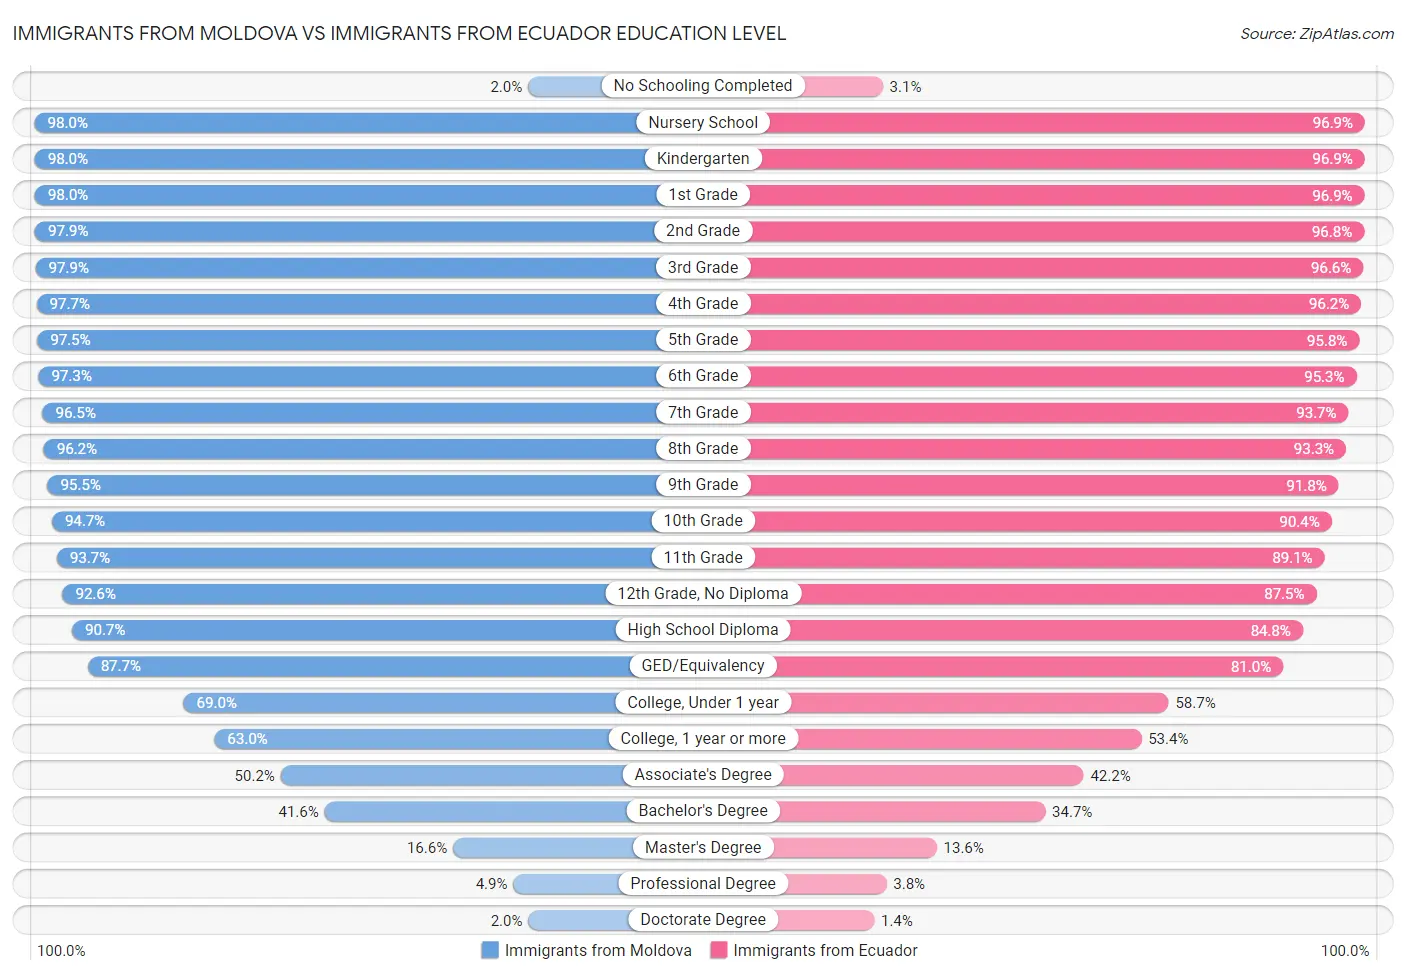 Immigrants from Moldova vs Immigrants from Ecuador Education Level